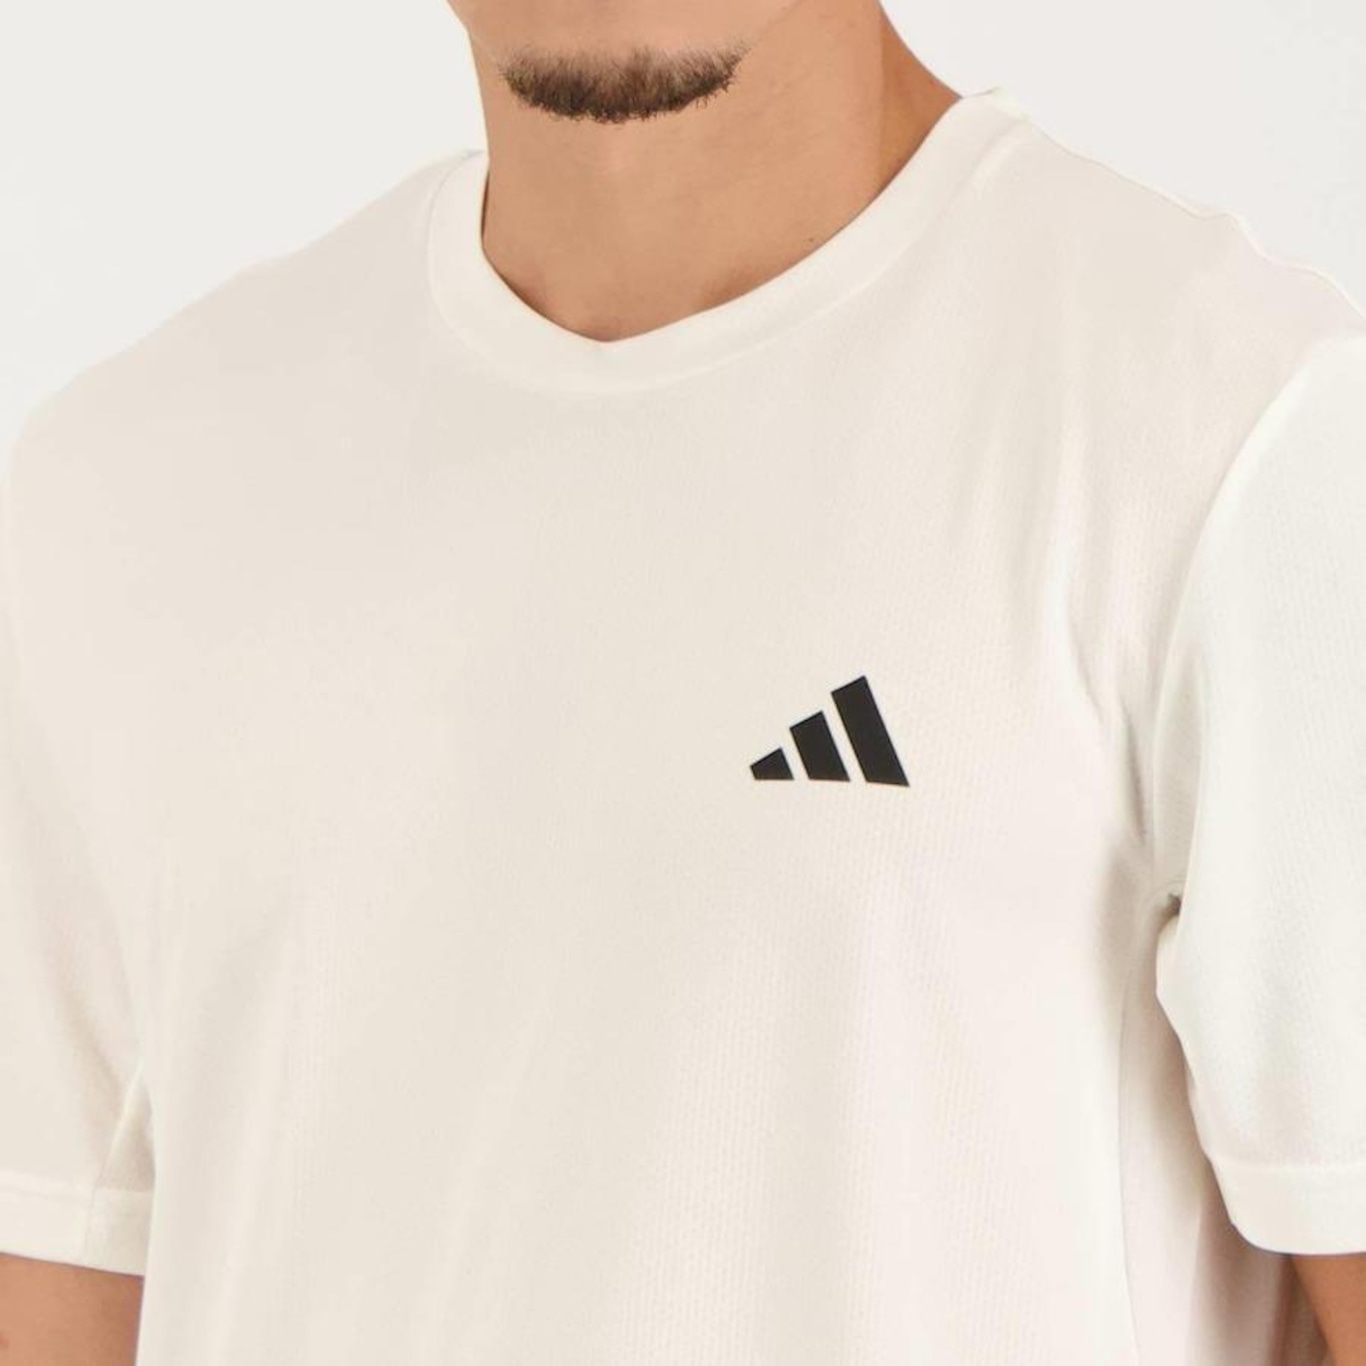 Camiseta Adidas Performance Essential 3 Stripes Masculina Branco